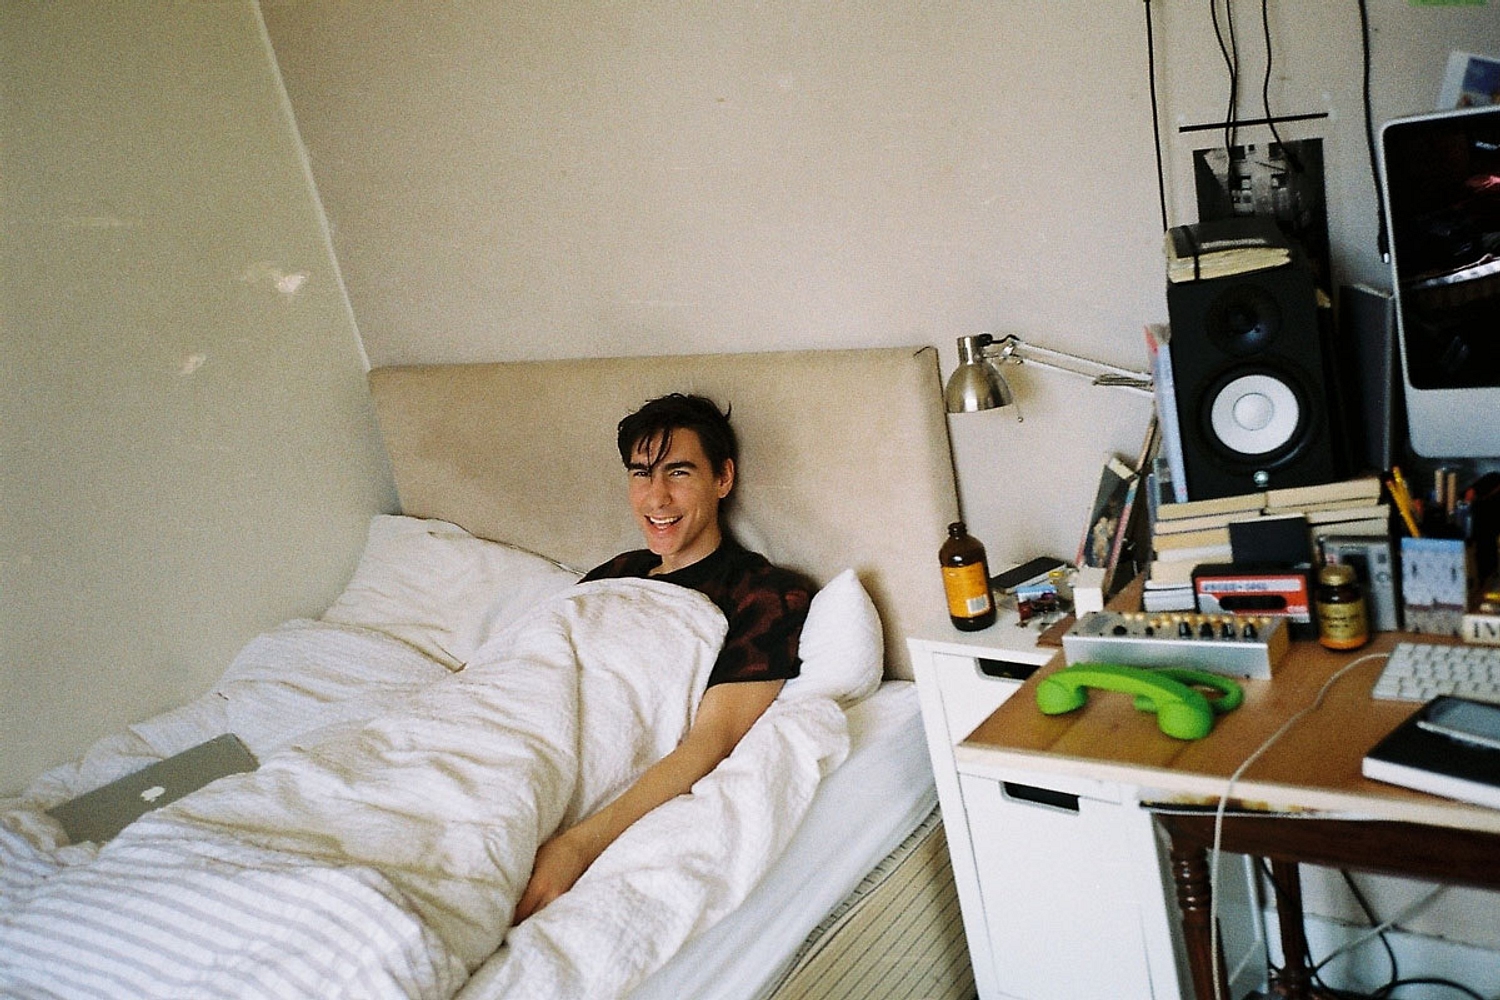 Roommates: The strange beauty of bedroom recording